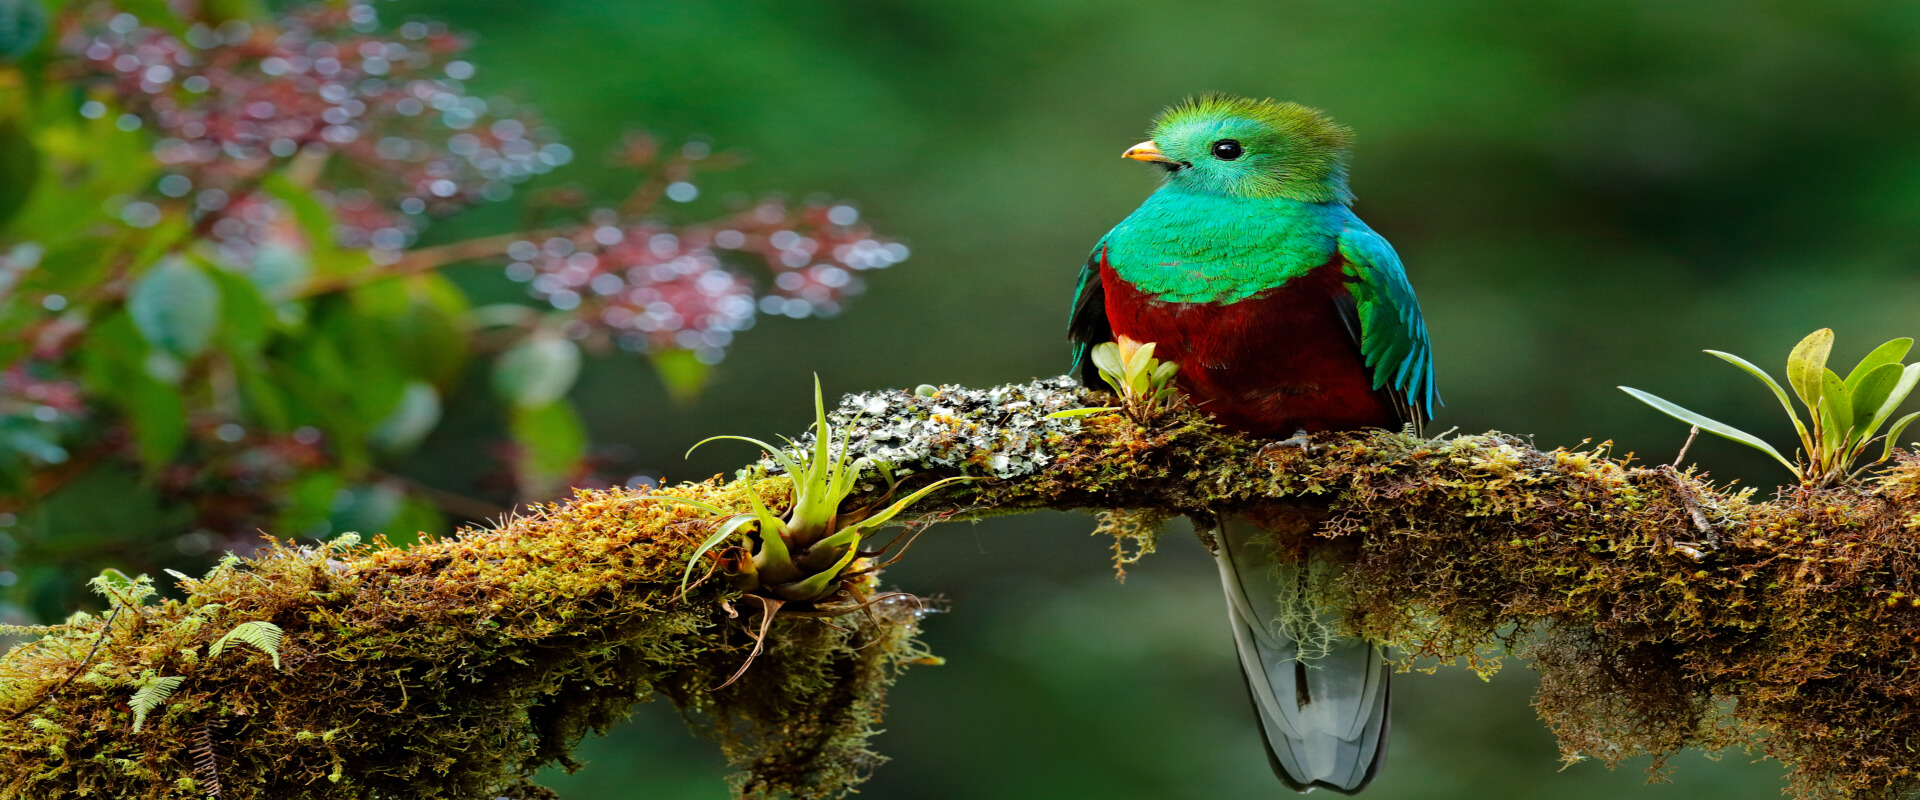 Monteverde Cloud Forest Biological Reserve Nature Tour | Costa Rica Jade Tours